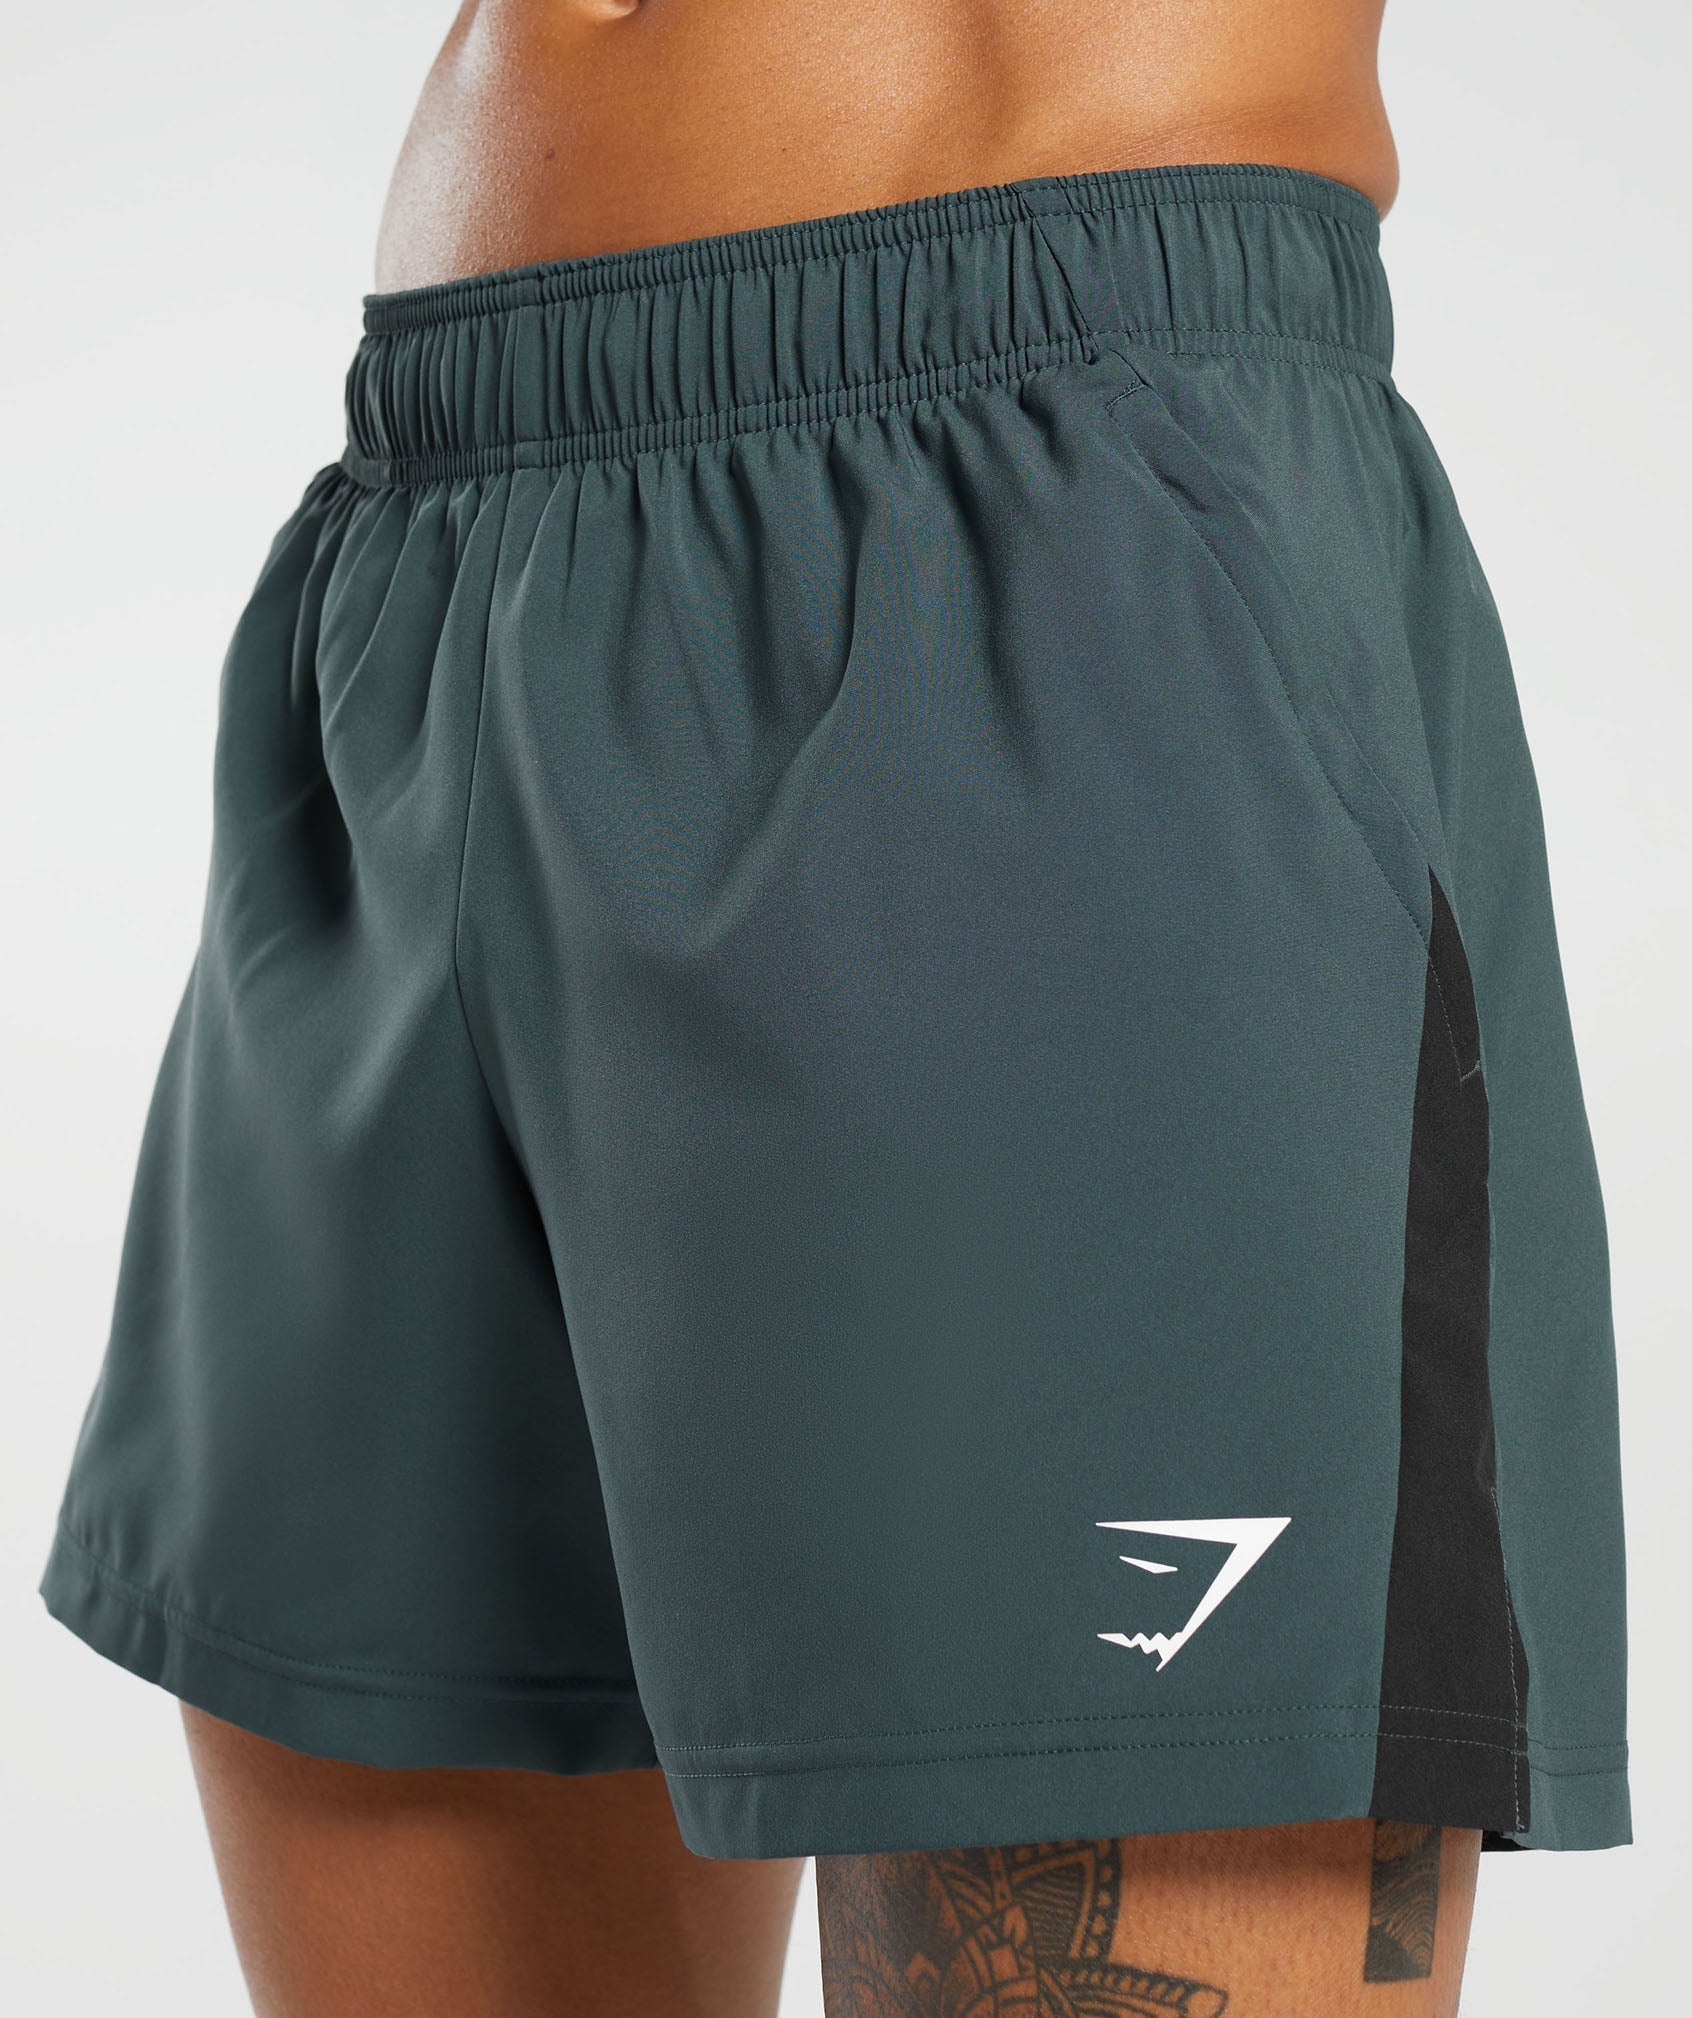 Sport 5" Shorts in Fog Green/Black - view 6